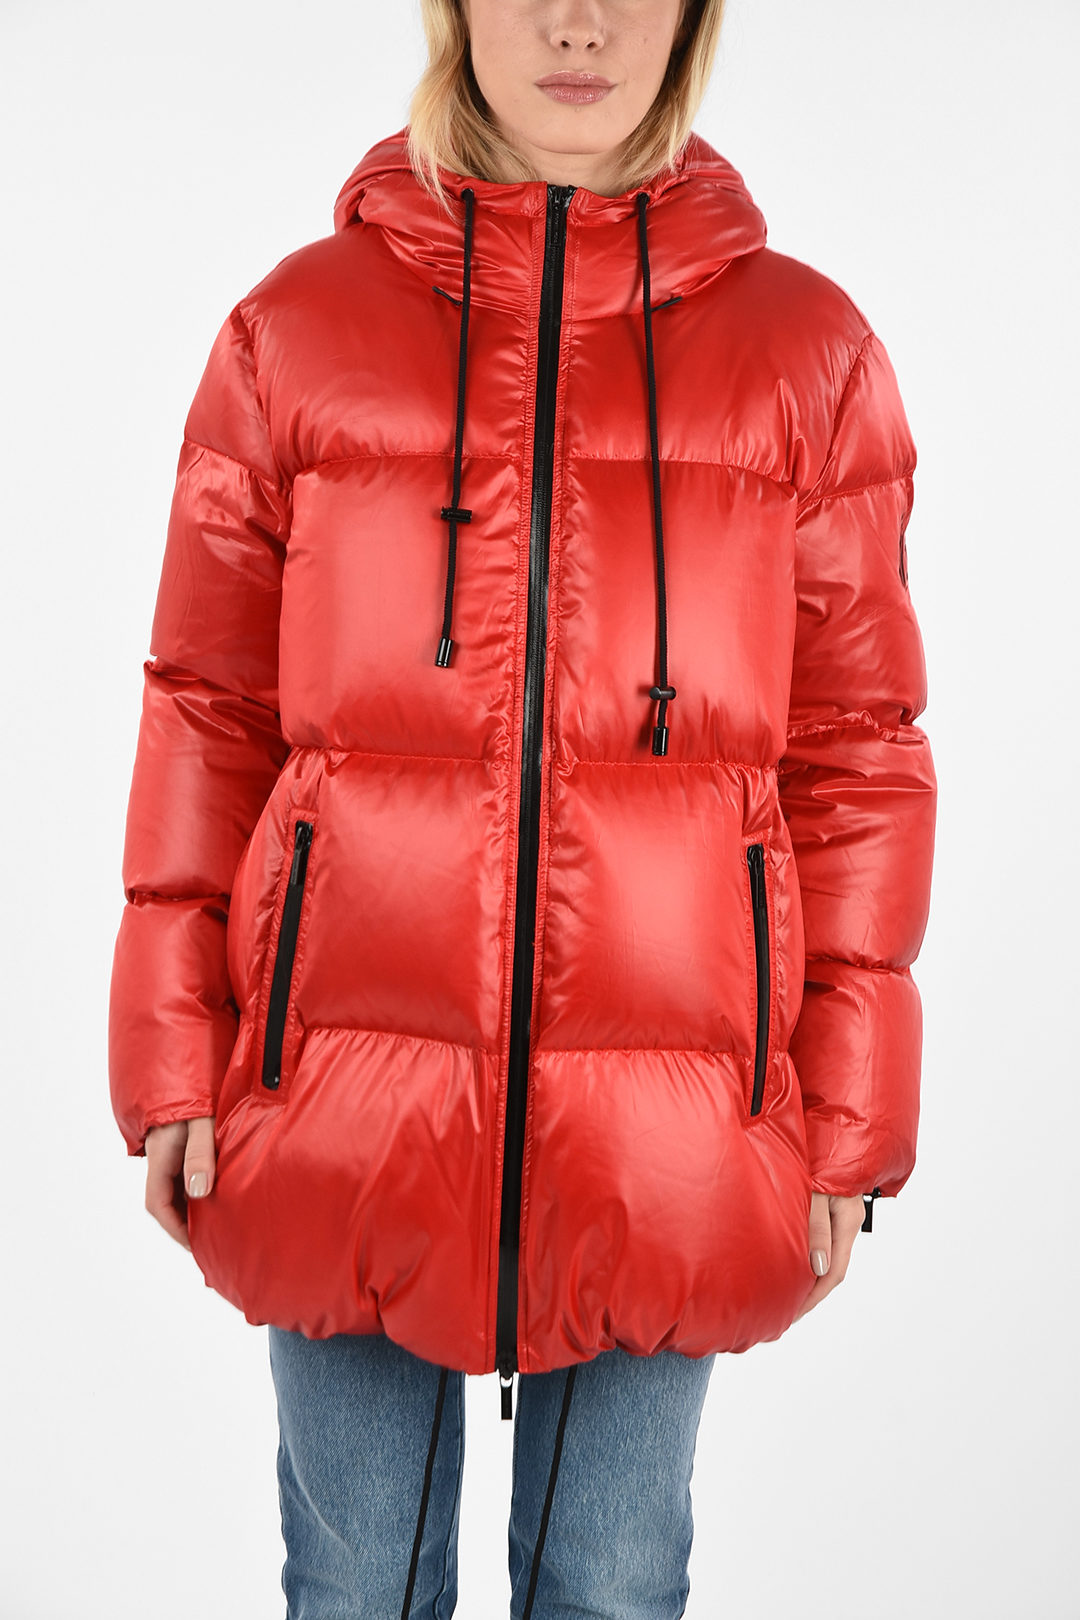 Michael Kors Full Zip Hooded Down Jacket women - Glamood Outlet